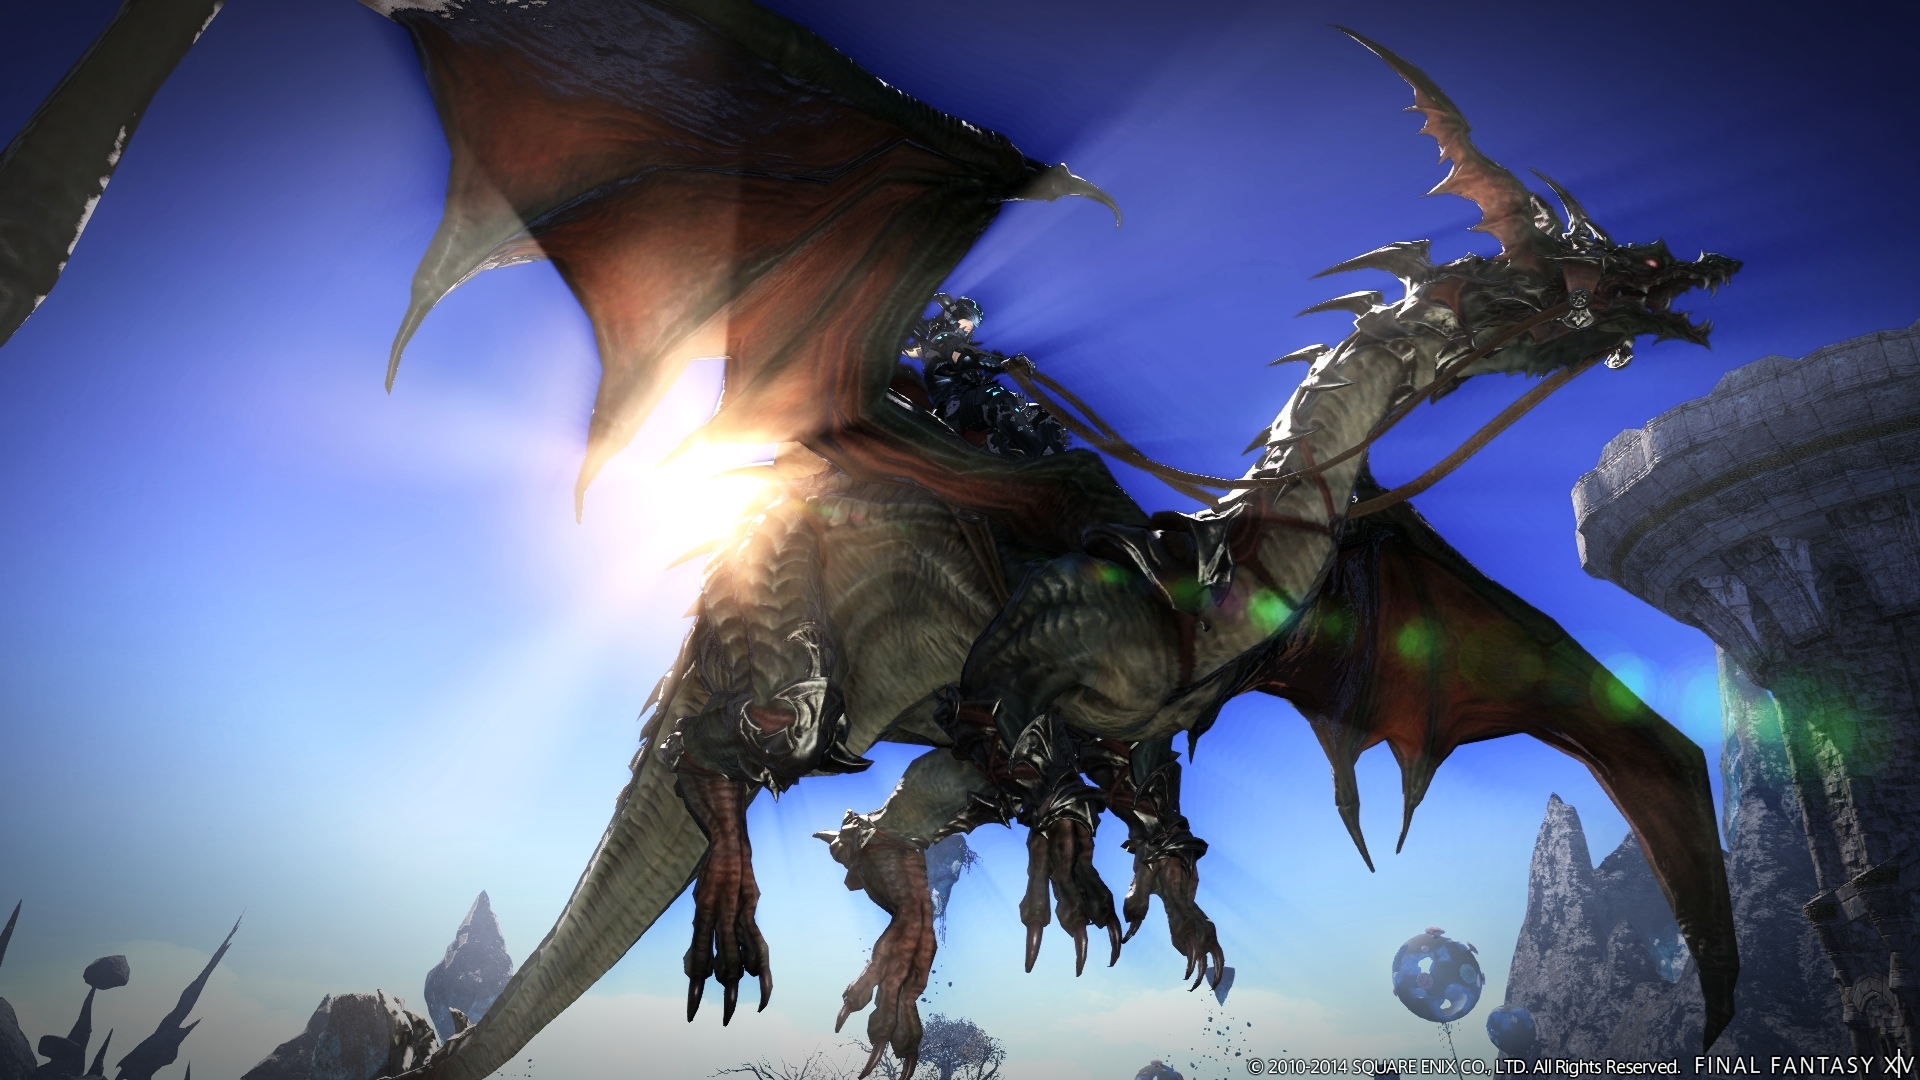 Final Fantasy XIV: Heavensward Ak to nie je dostatone jasn, draci maj v Heavensward obrovsk priestor i siln lohu.